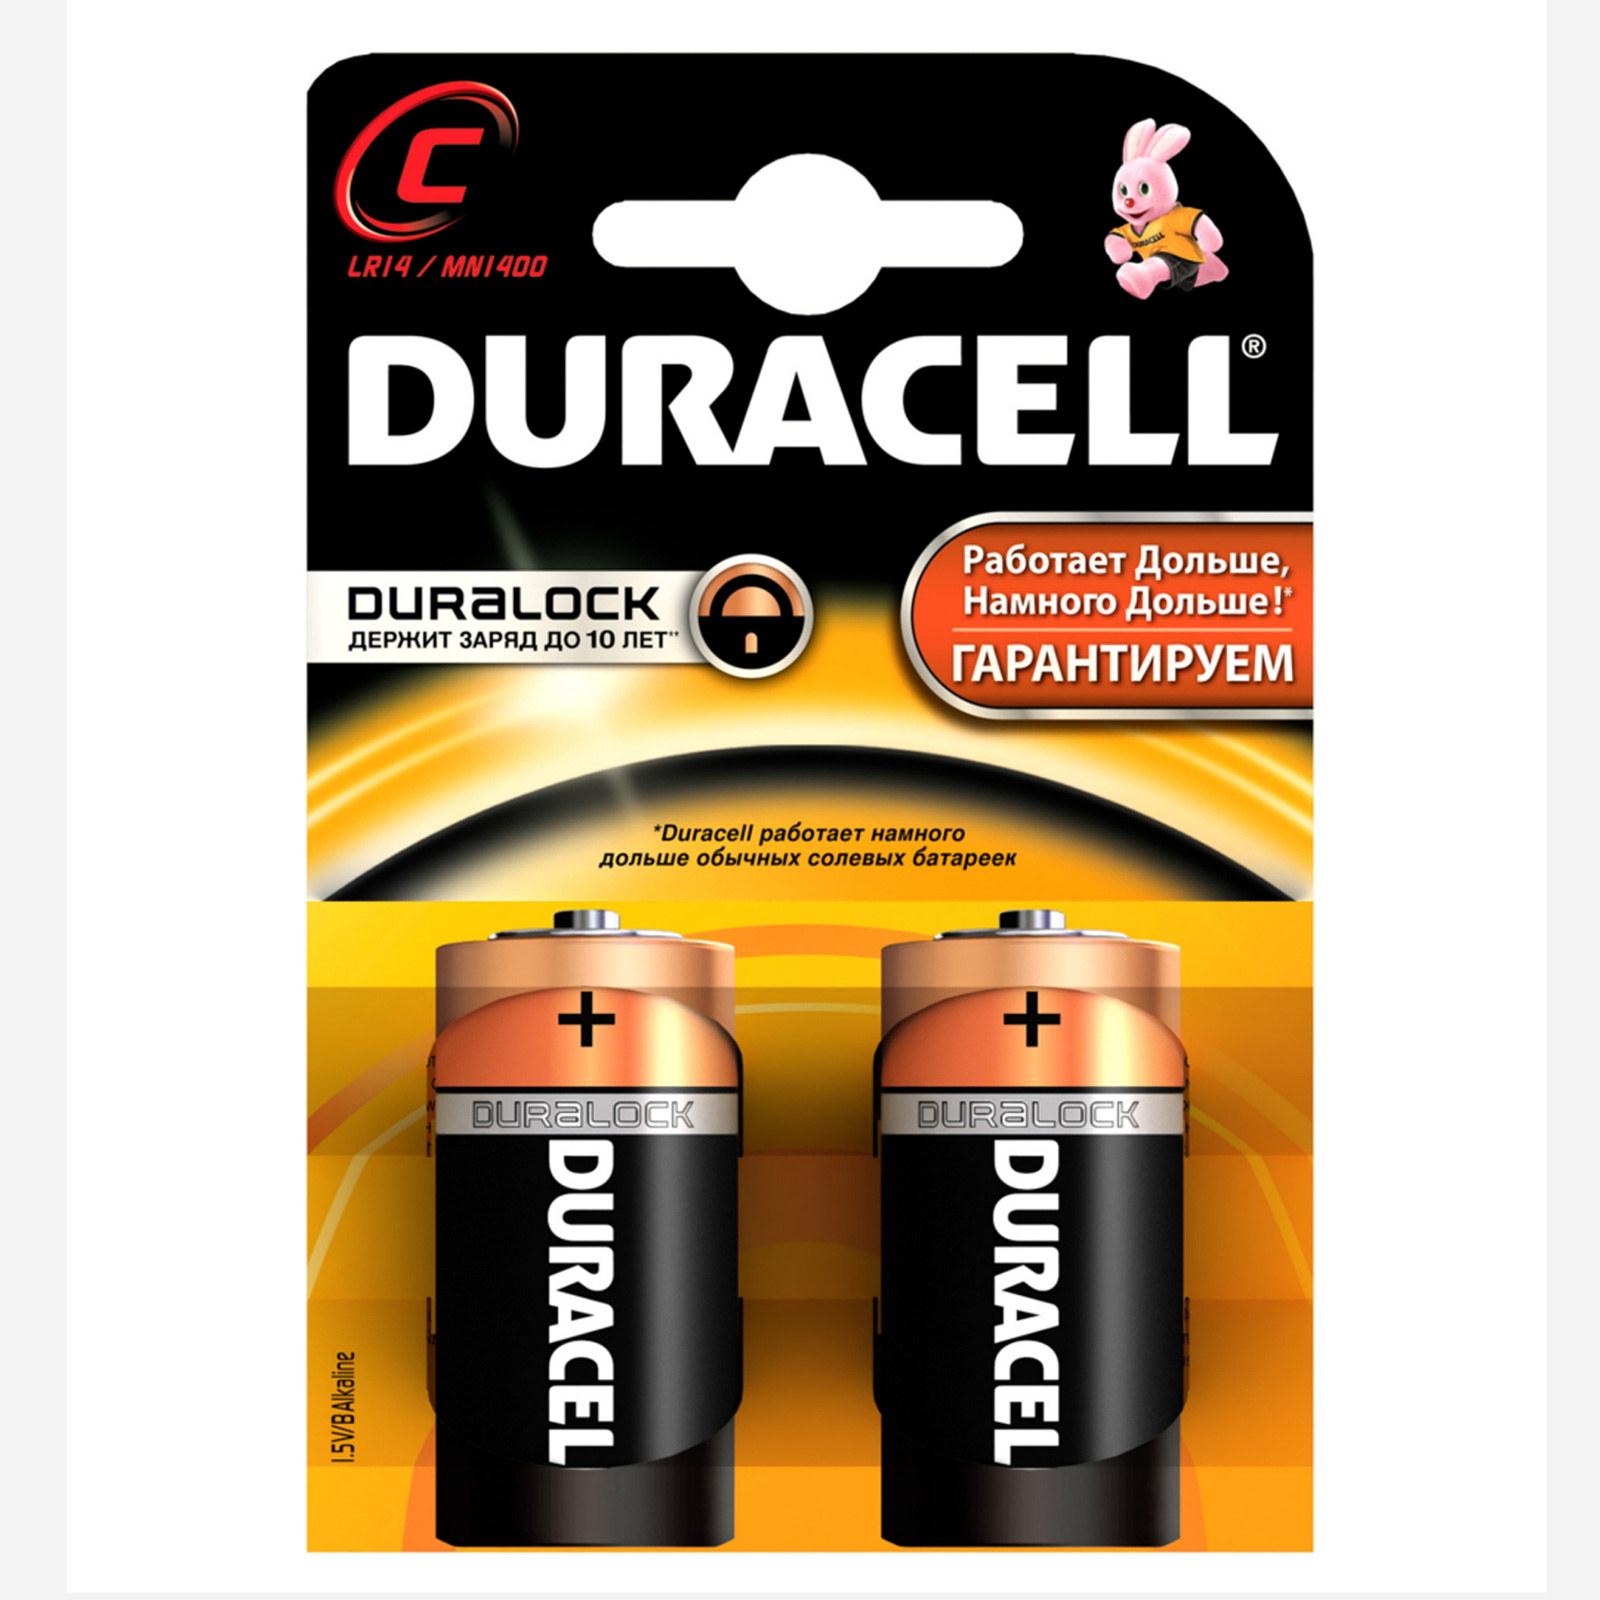 Элемент питания c. Батарейка Duracell lr14/c-2bl. Батарейки Duracell Basic батарейки Duracell Basic c/lr14-2bl/lr14-2bl. Батарейки Duracell c/lr14. Батарейки Duracell Basic c/lr14-2bl.